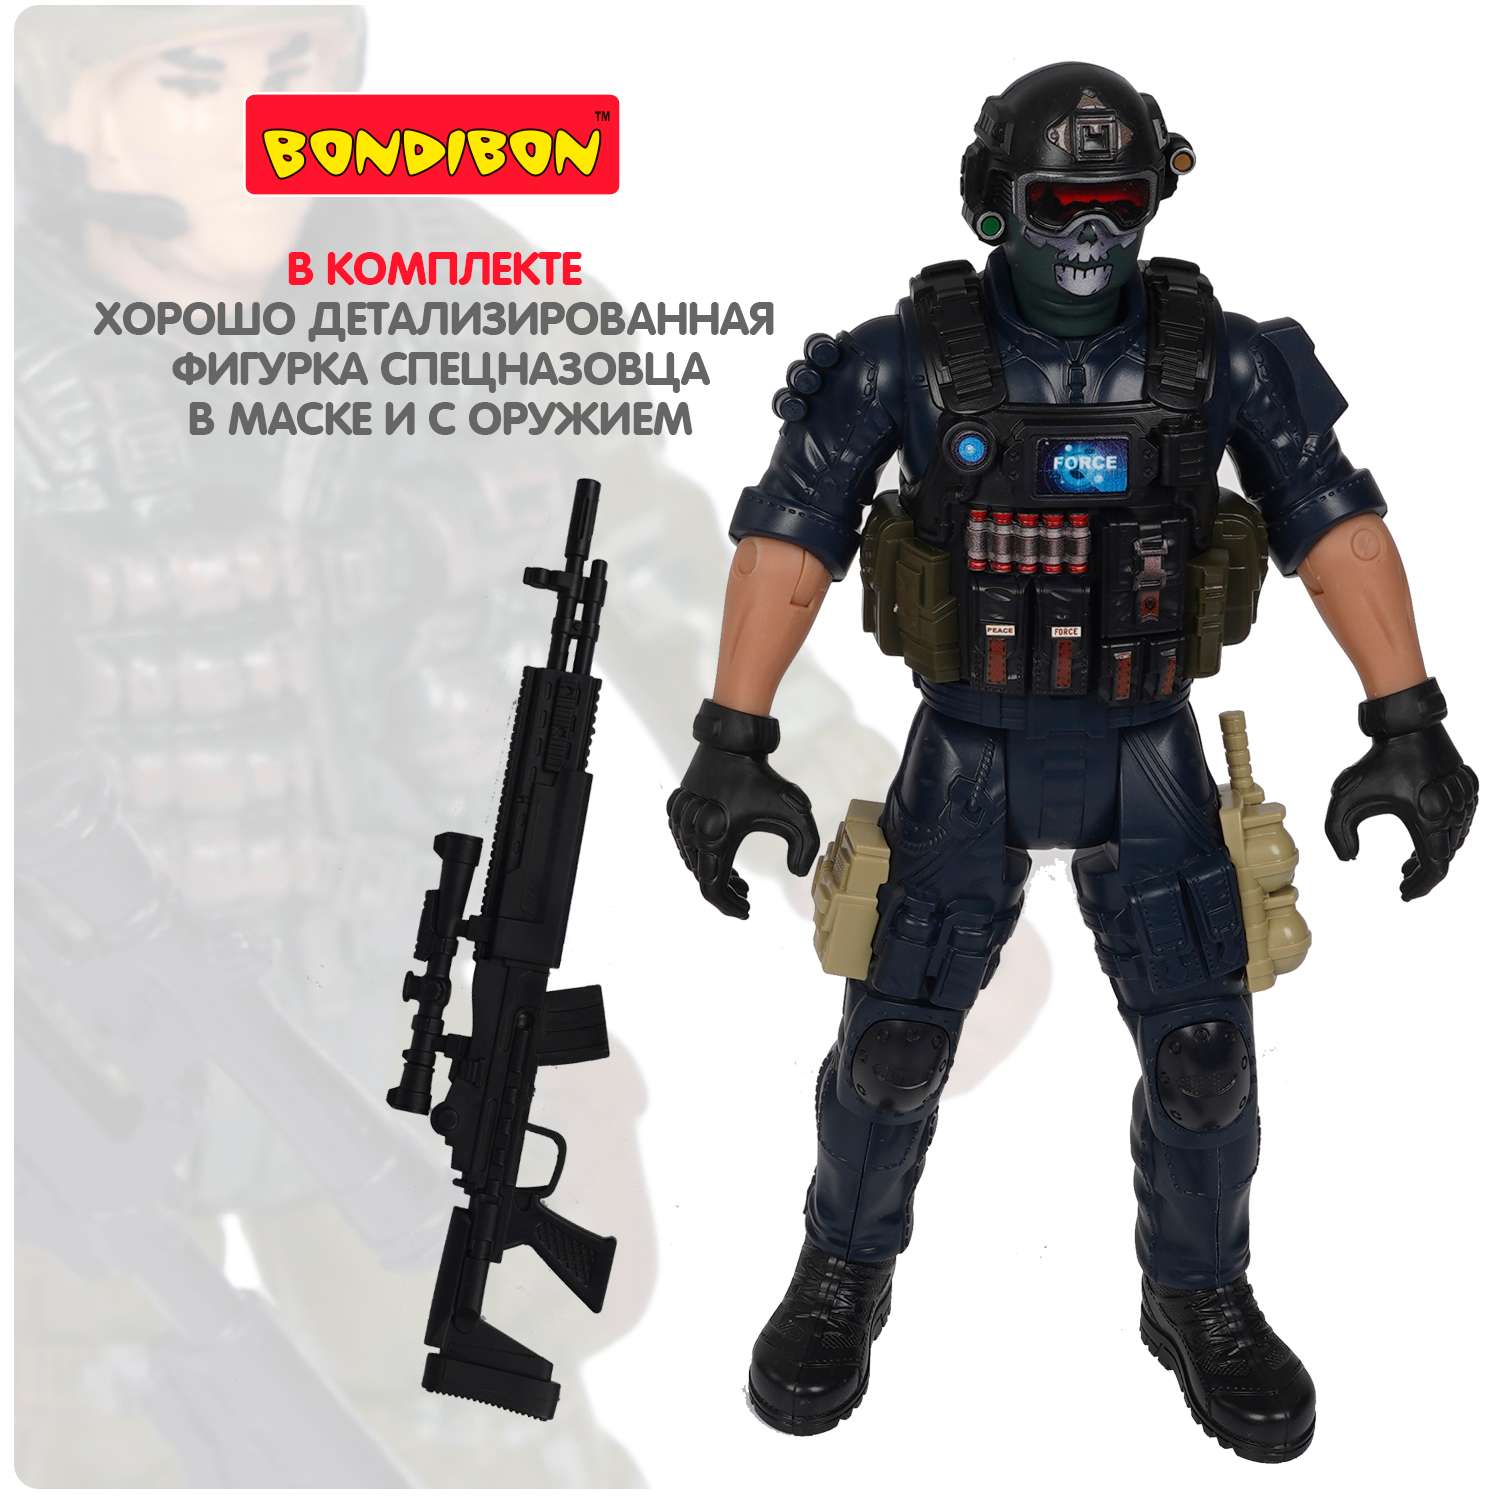 Развивающий игровой набор BONDIBON фигурка солдата спецназа - фото 4